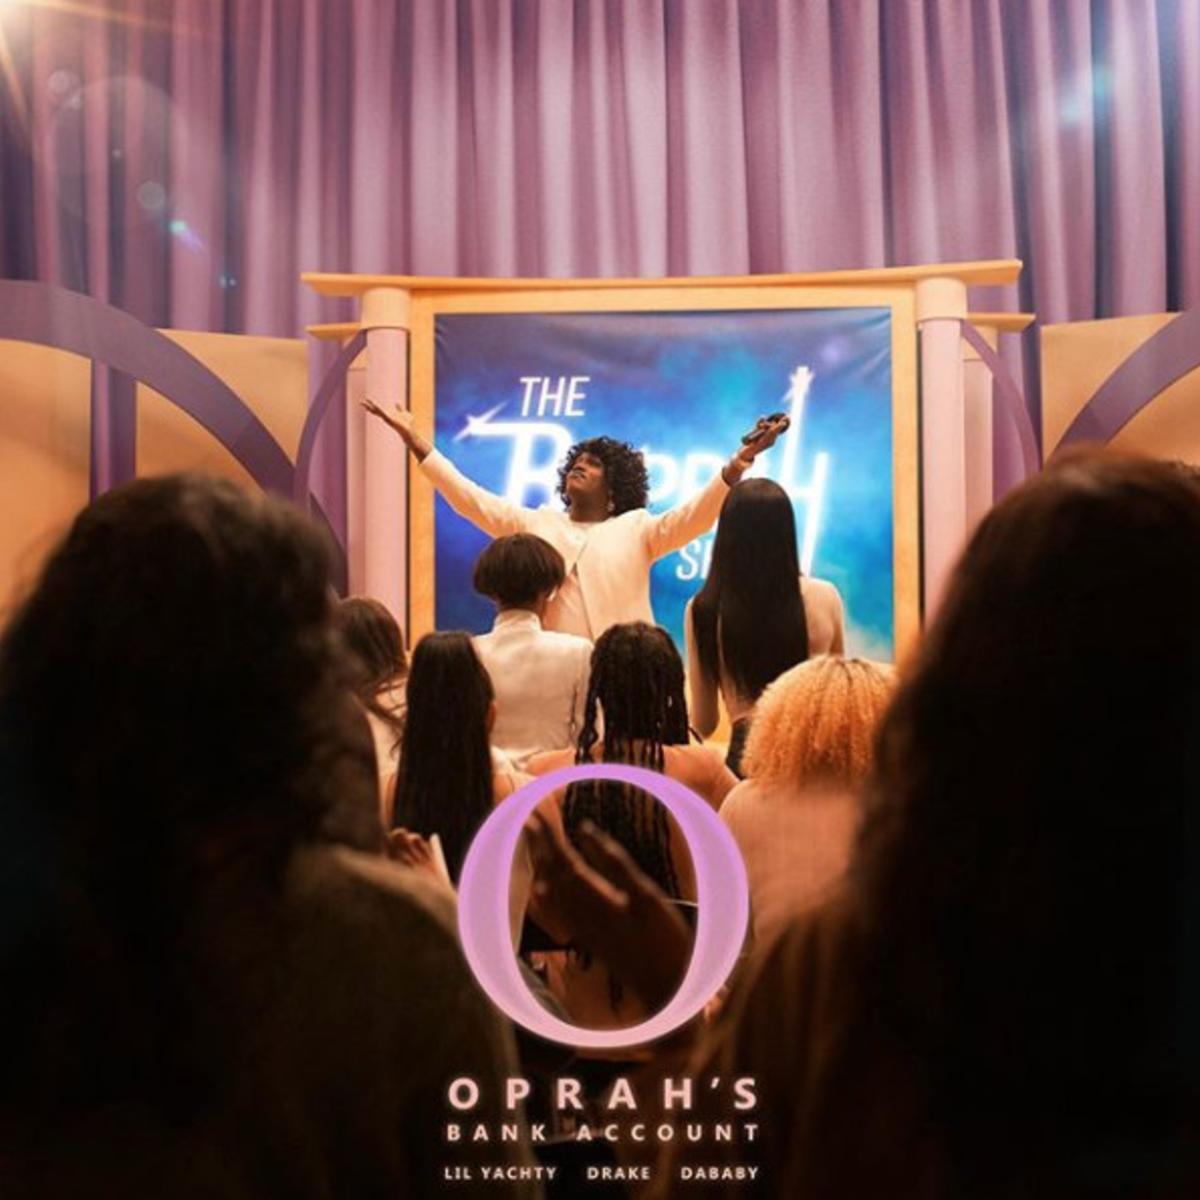 Lil Yachty, Drake & Dababy ‘Oprah’s Bank Account'